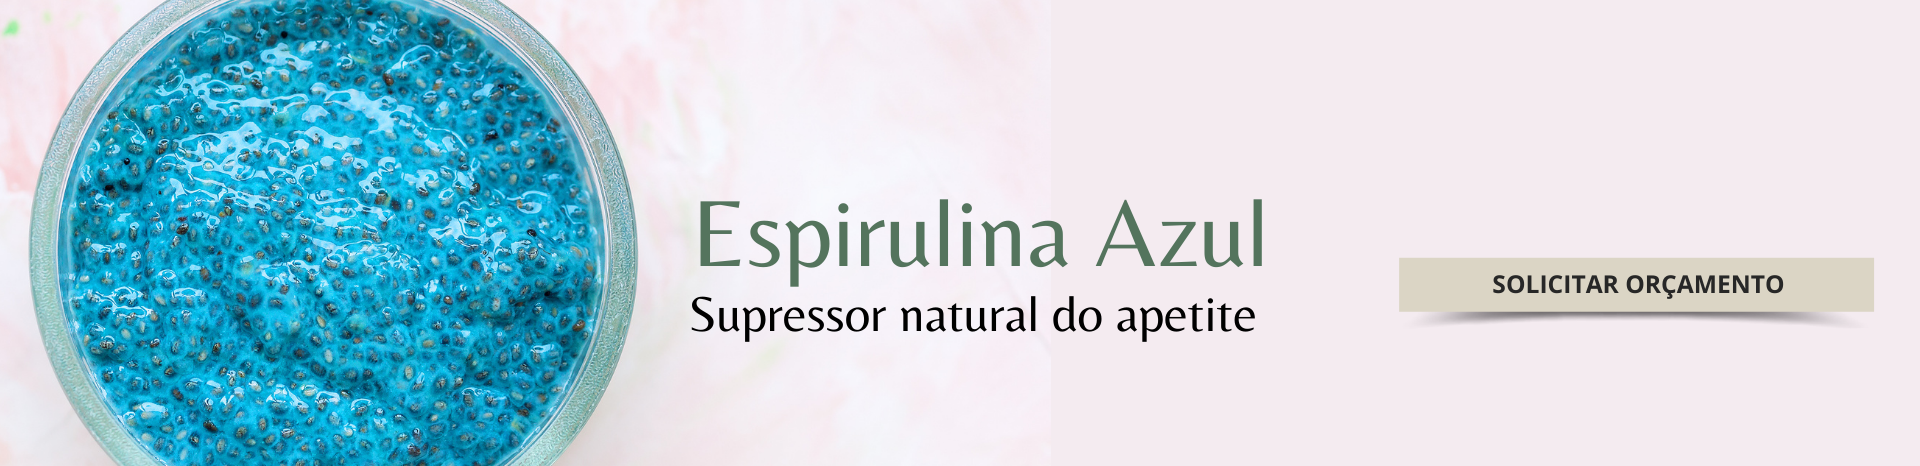 ESPIRULINA AZUL